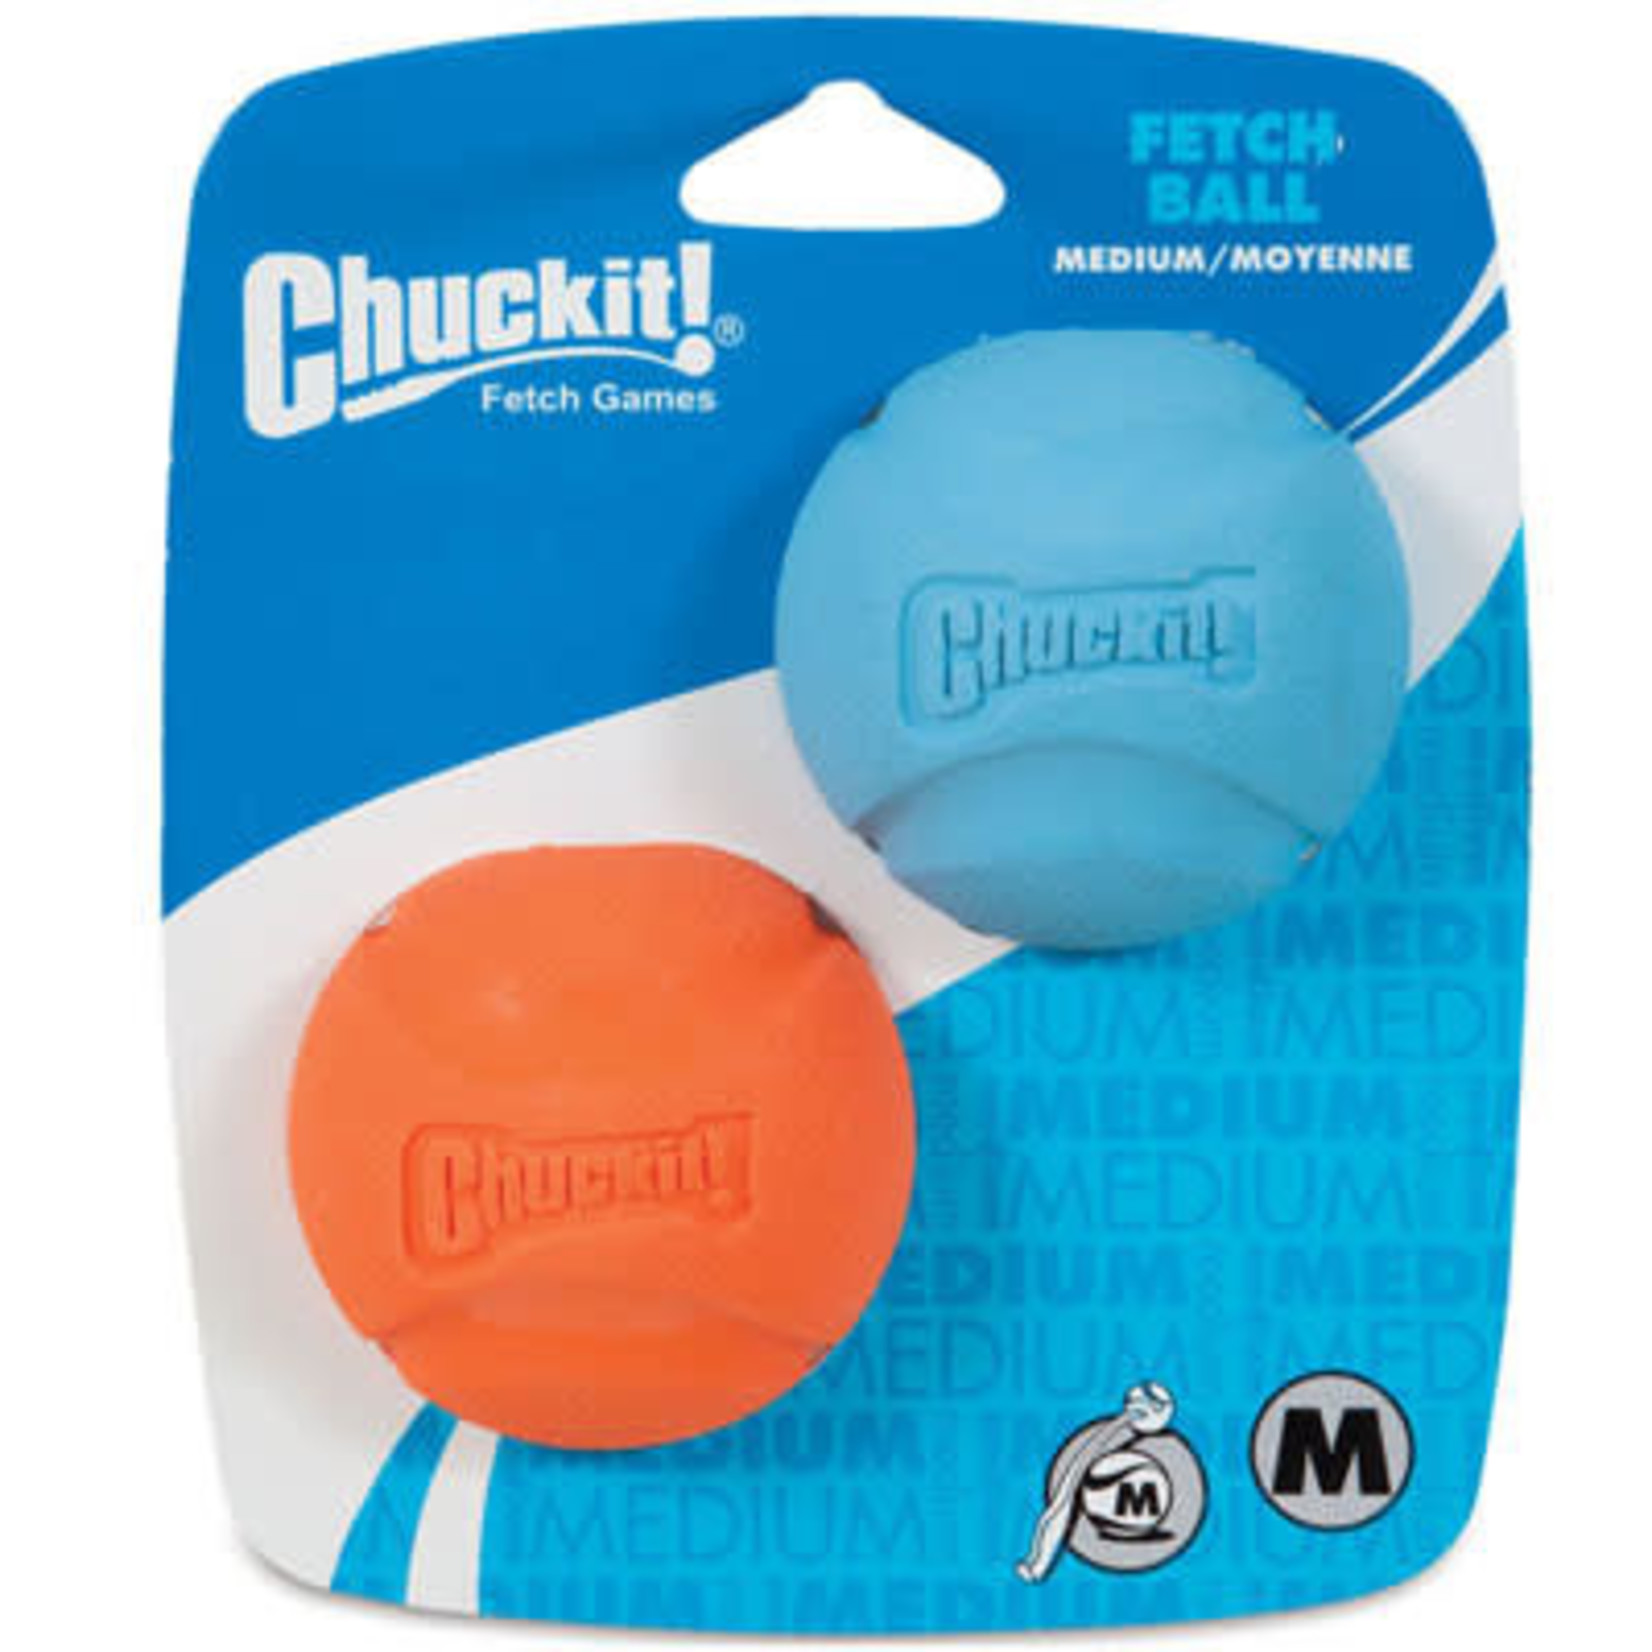 Chuckit 2-Pack Fetch Balls Chuckit